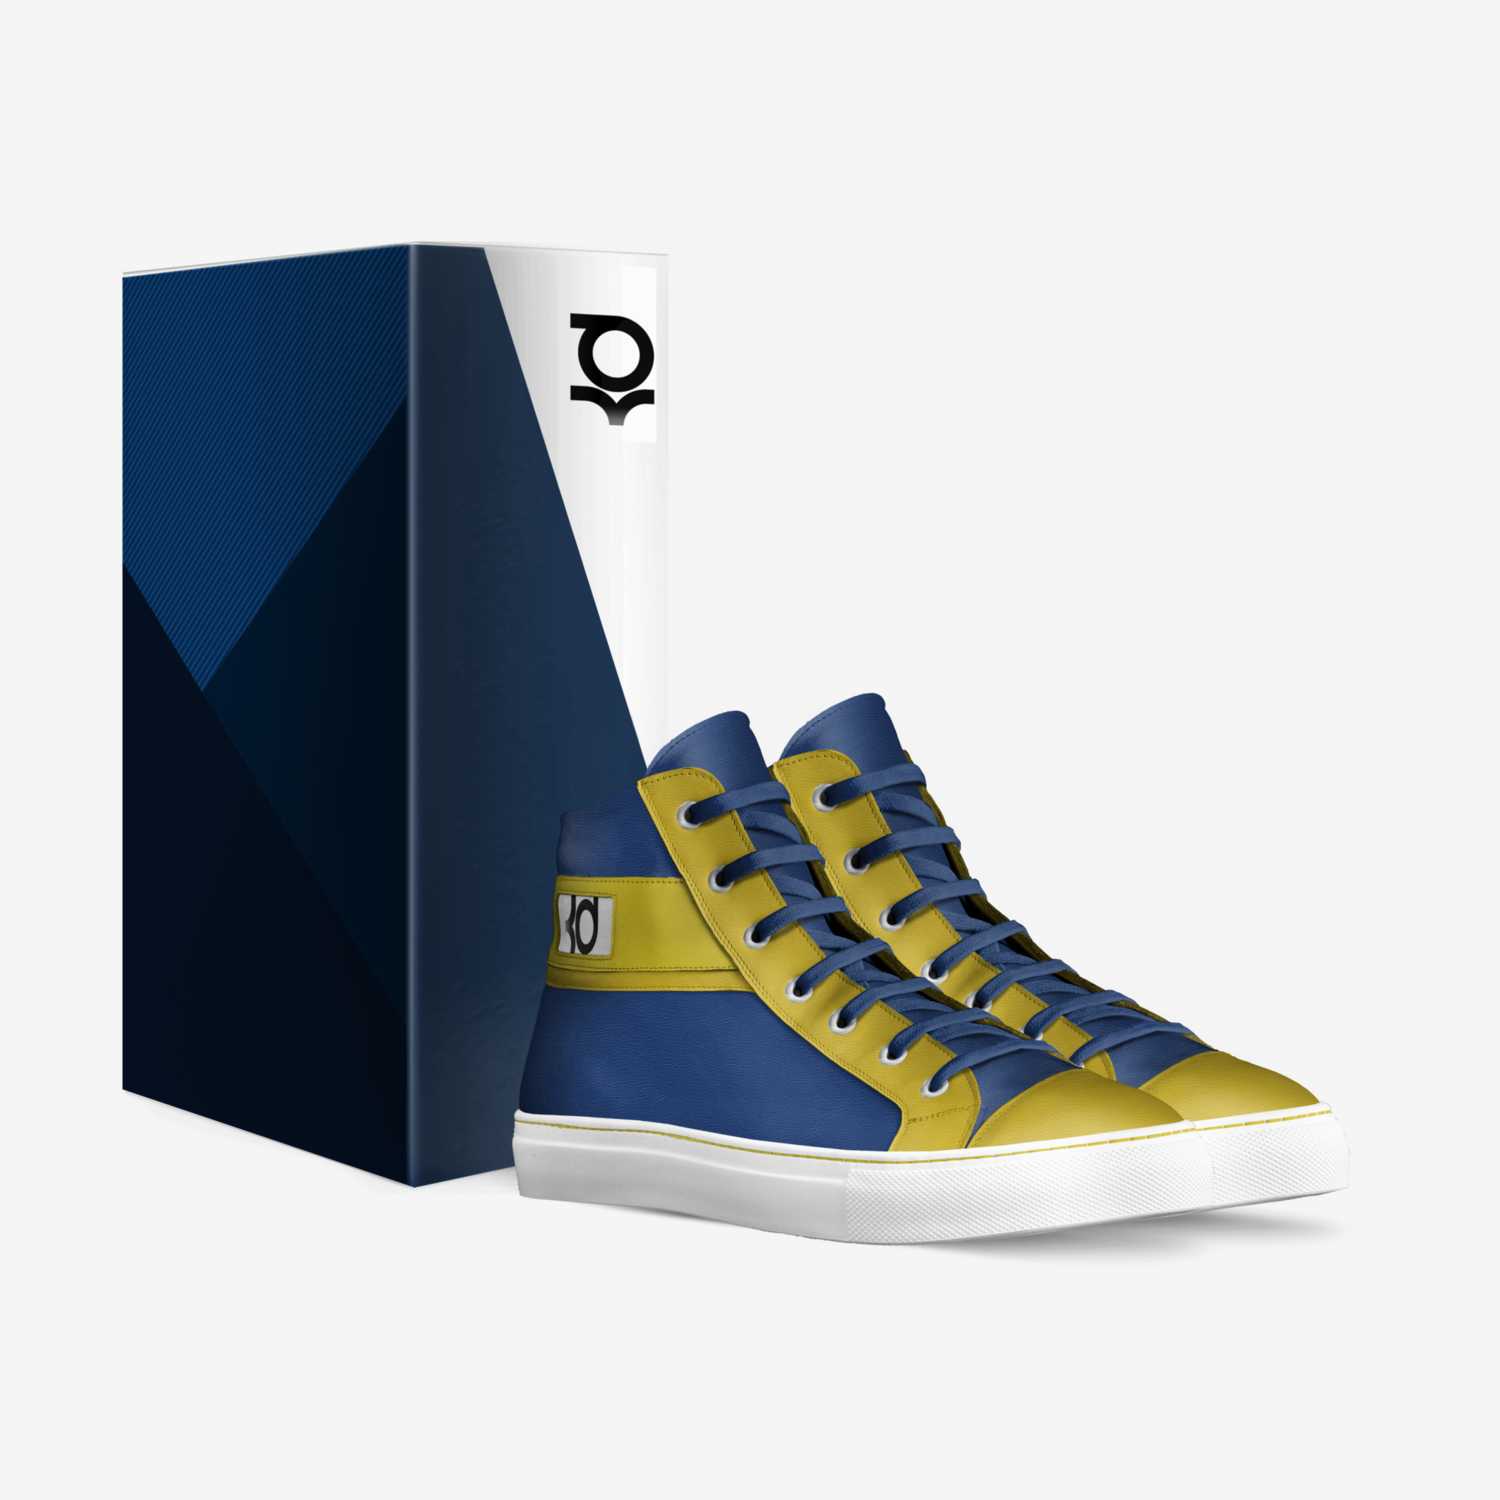 K1 custom made in Italy shoes by Kole Knighton | Box view